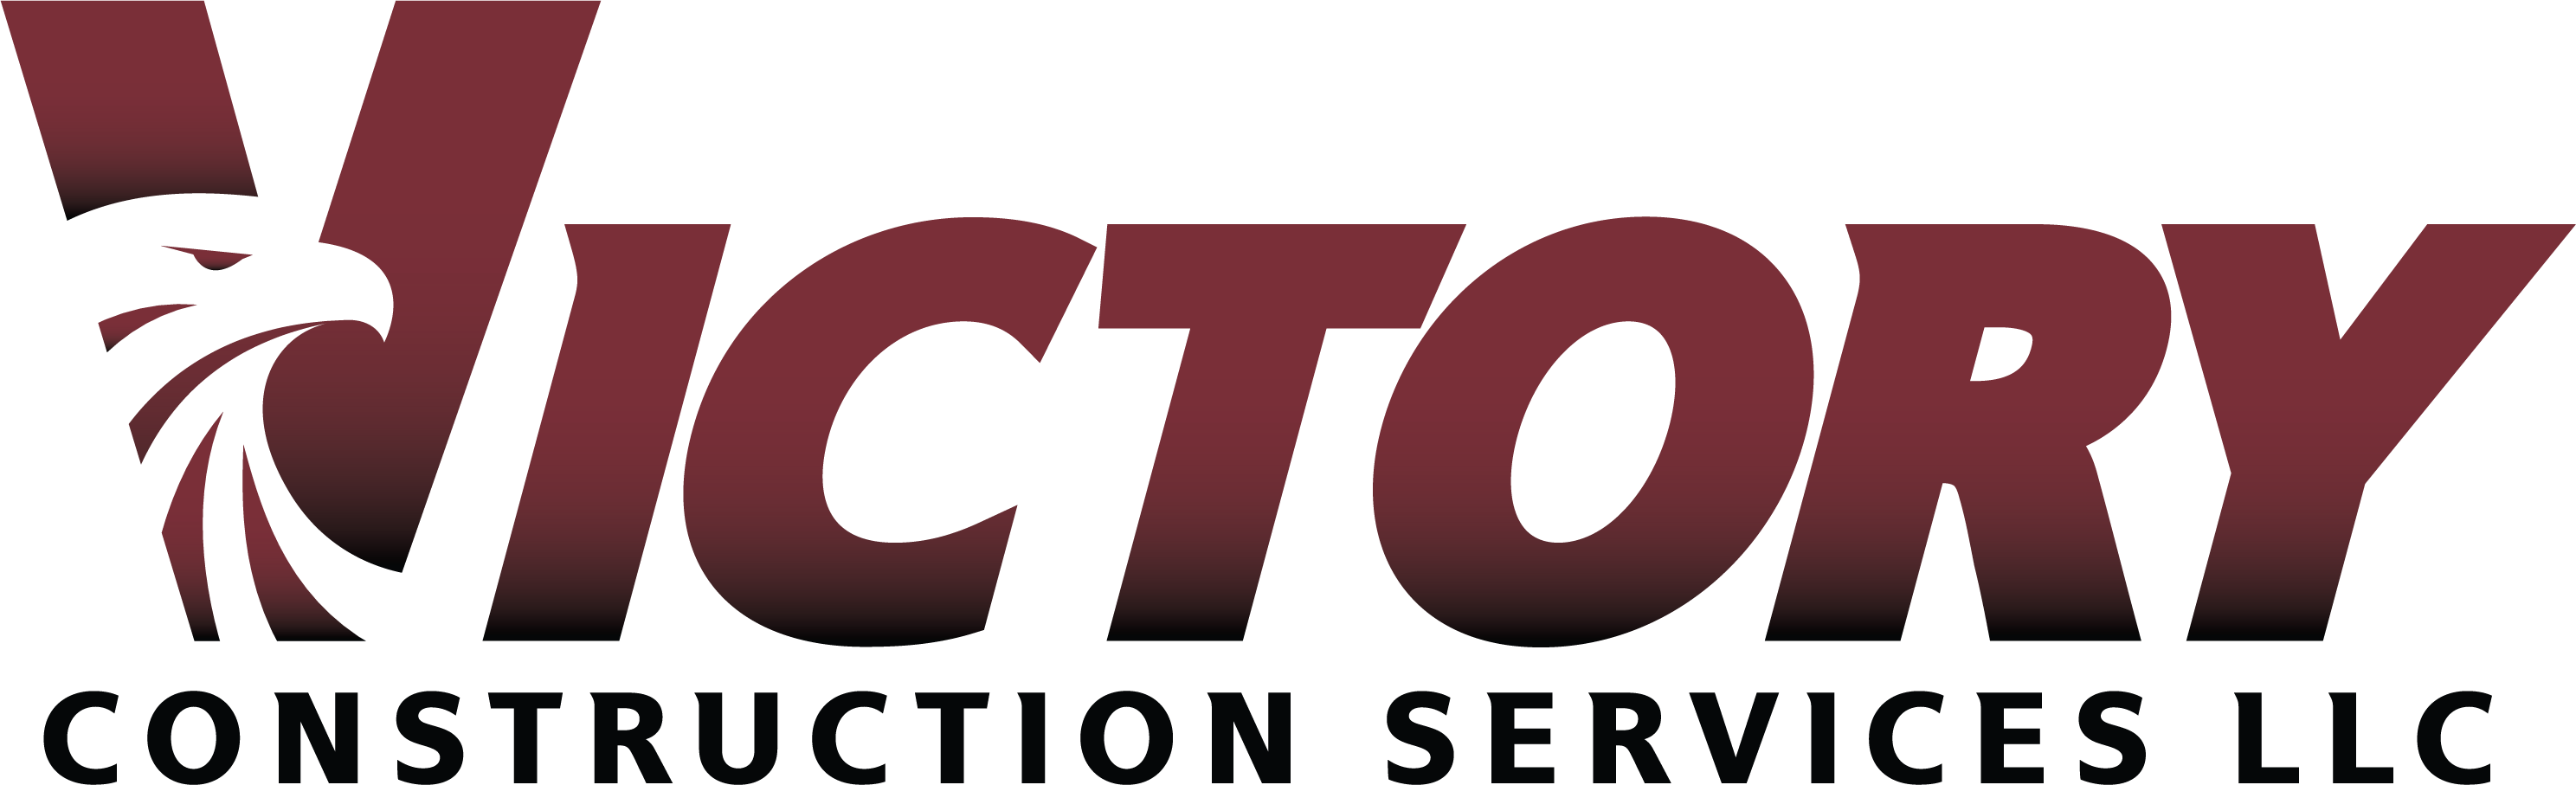 Victory Construction Services LLC Logo